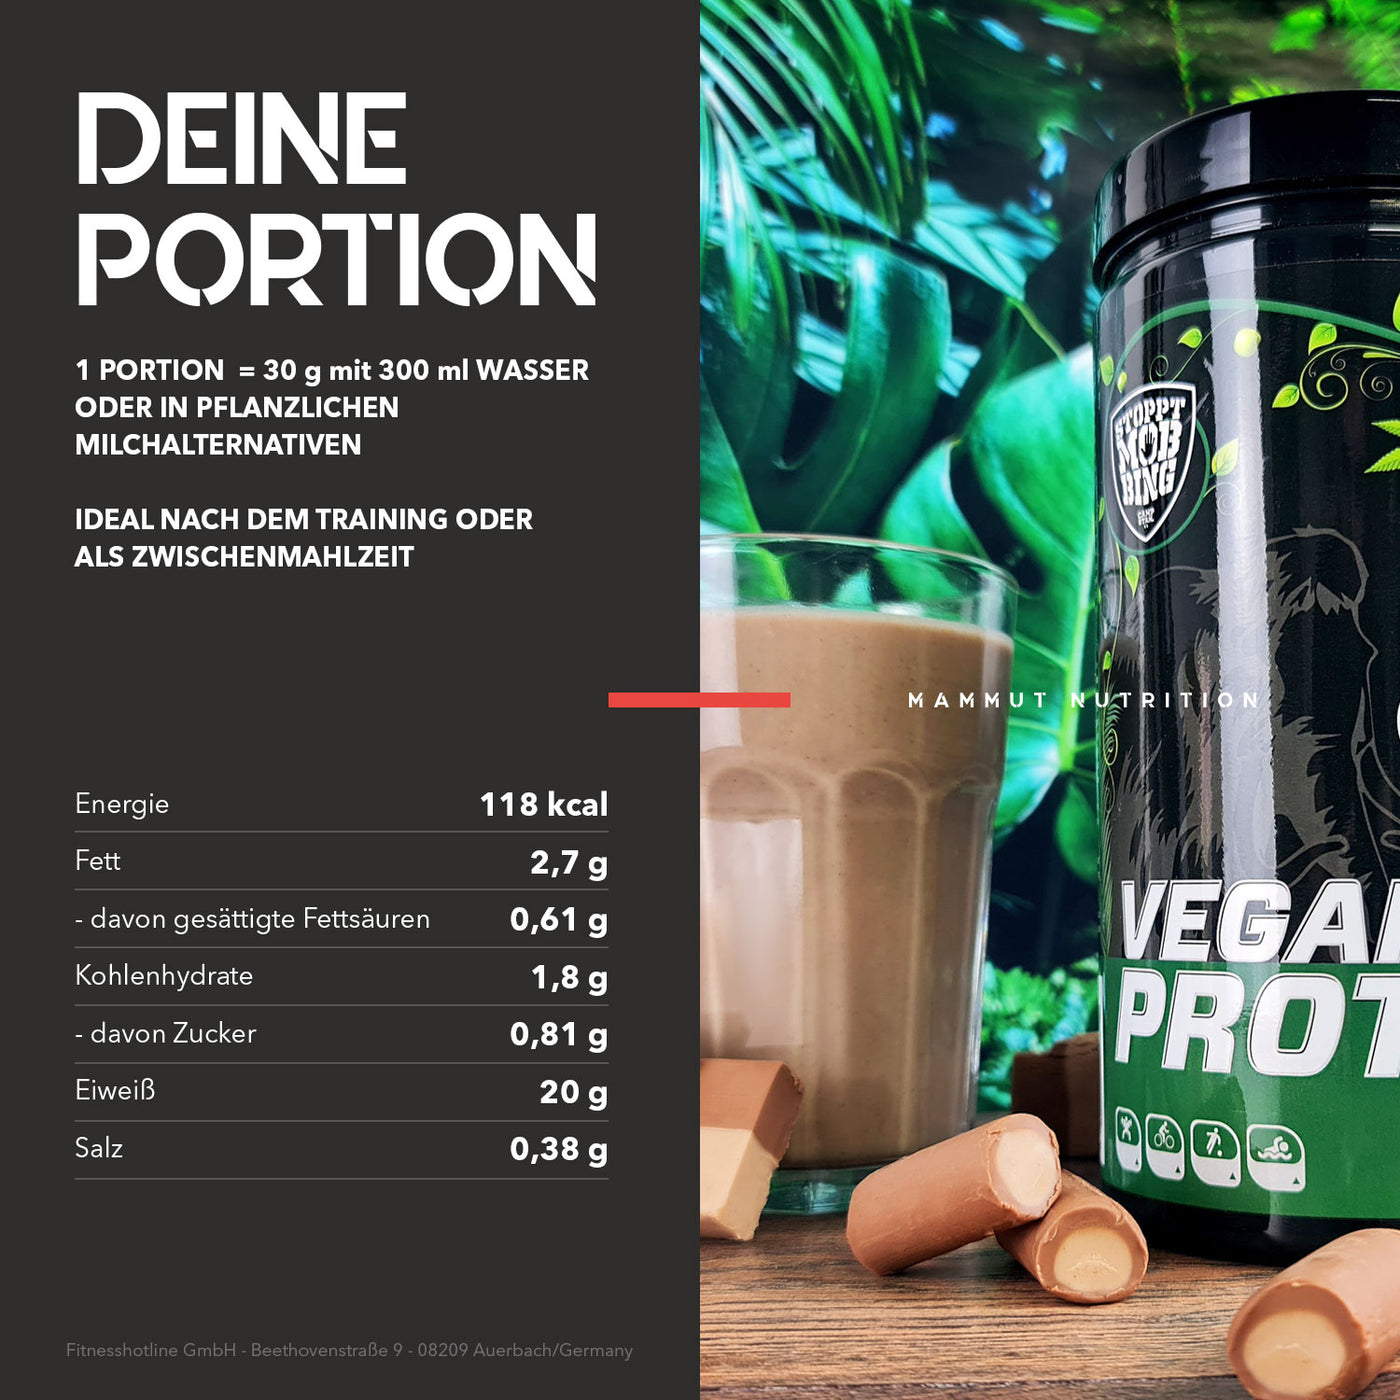 Vegan Protein - Nougat - 460 g Dose#geschmack_nougat